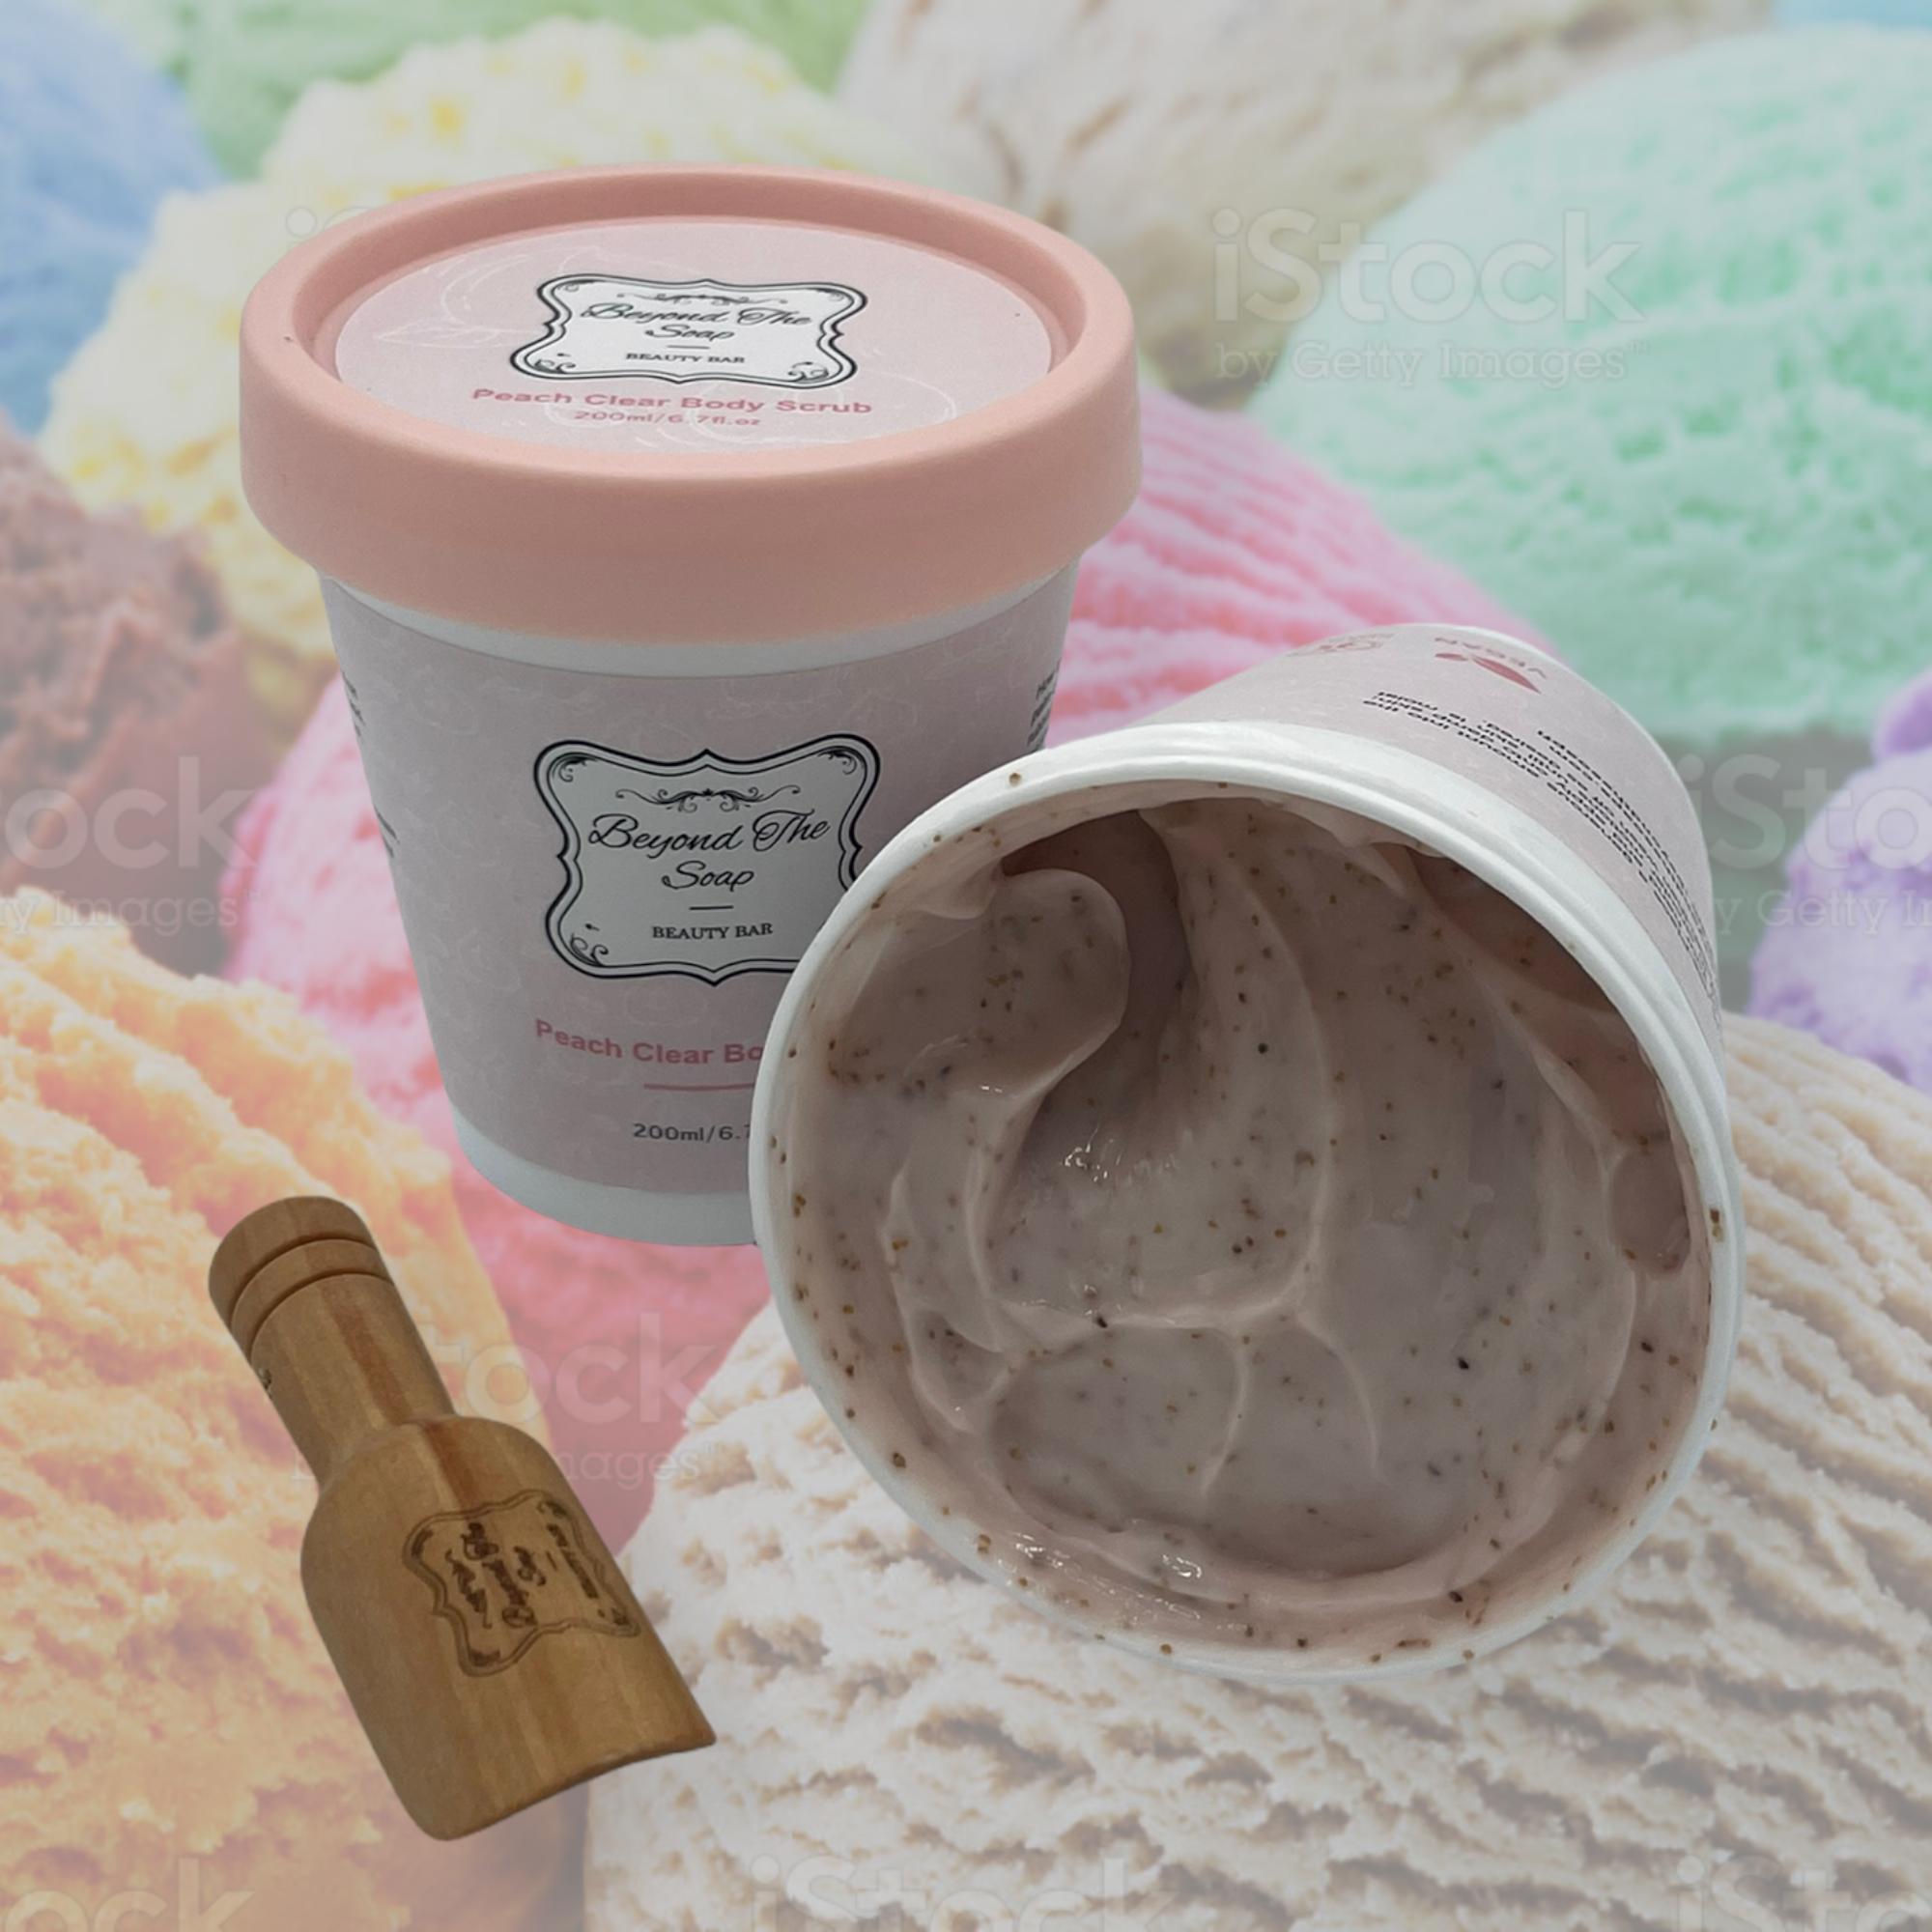 Body Scrub - Peach Clear Ice Cream